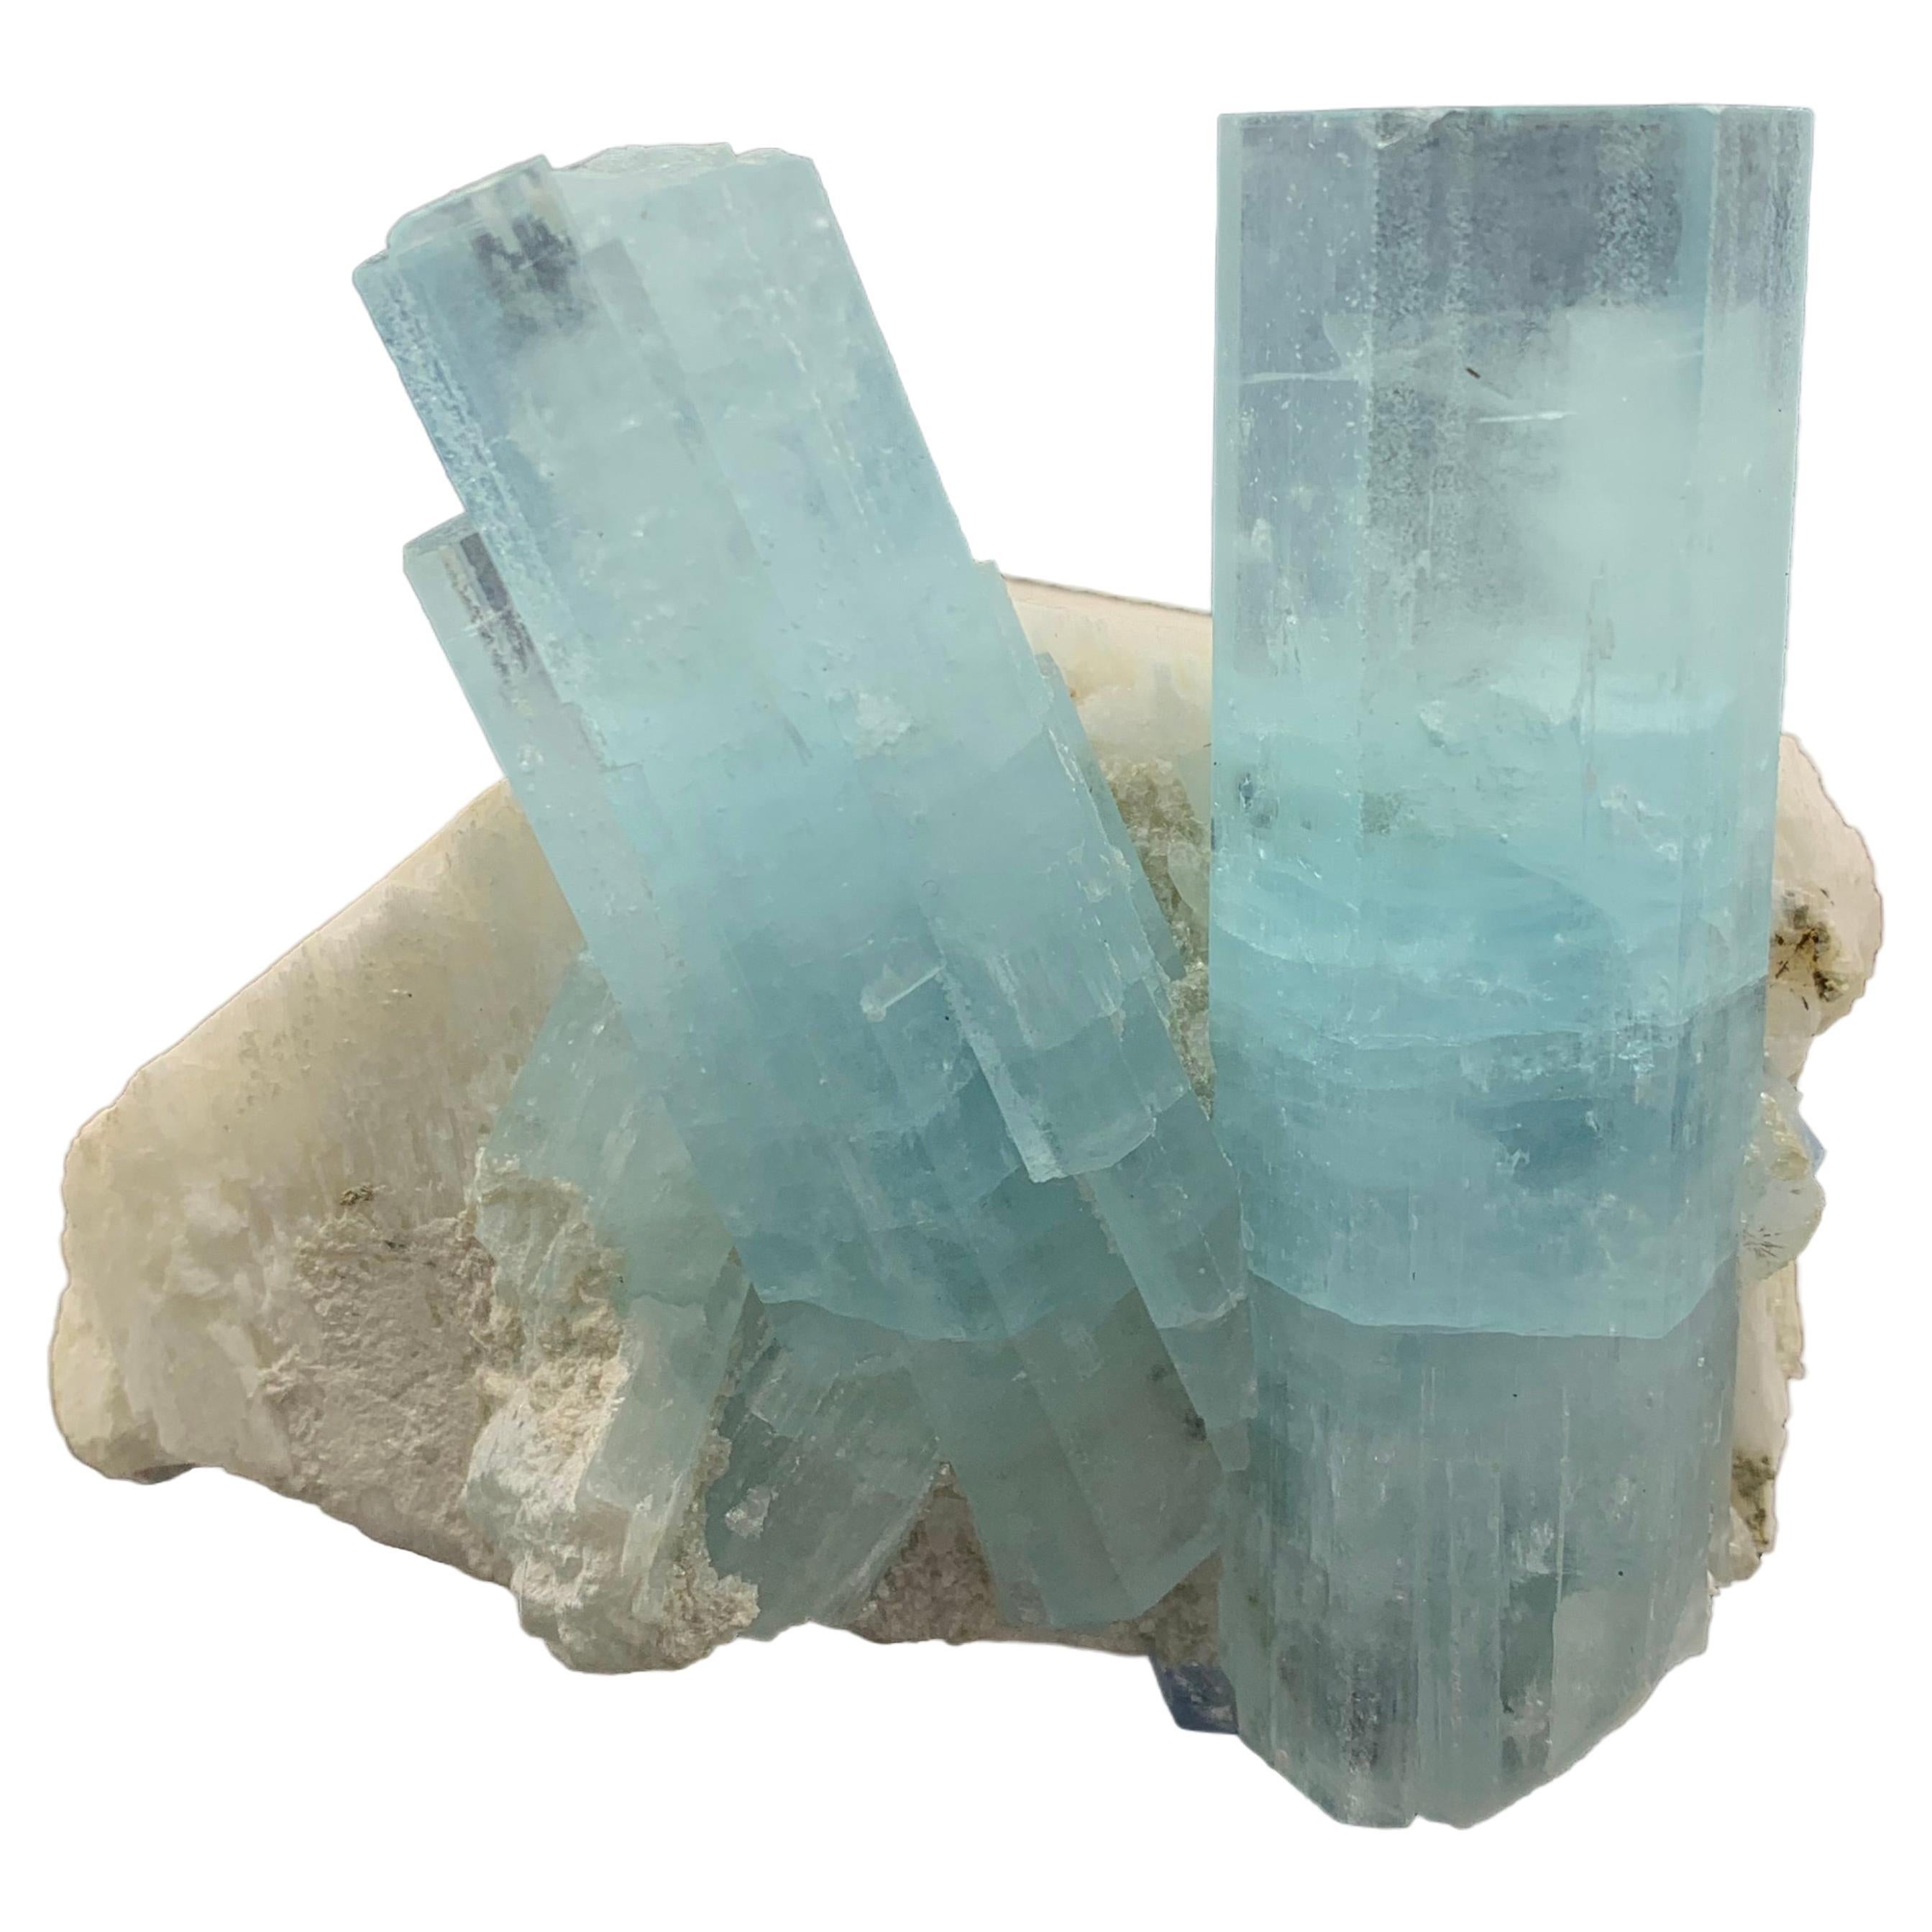 681.51 Gram Pretty Dual Aquamarine Crystal Attached With Feldspar From Pakistan  For Sale